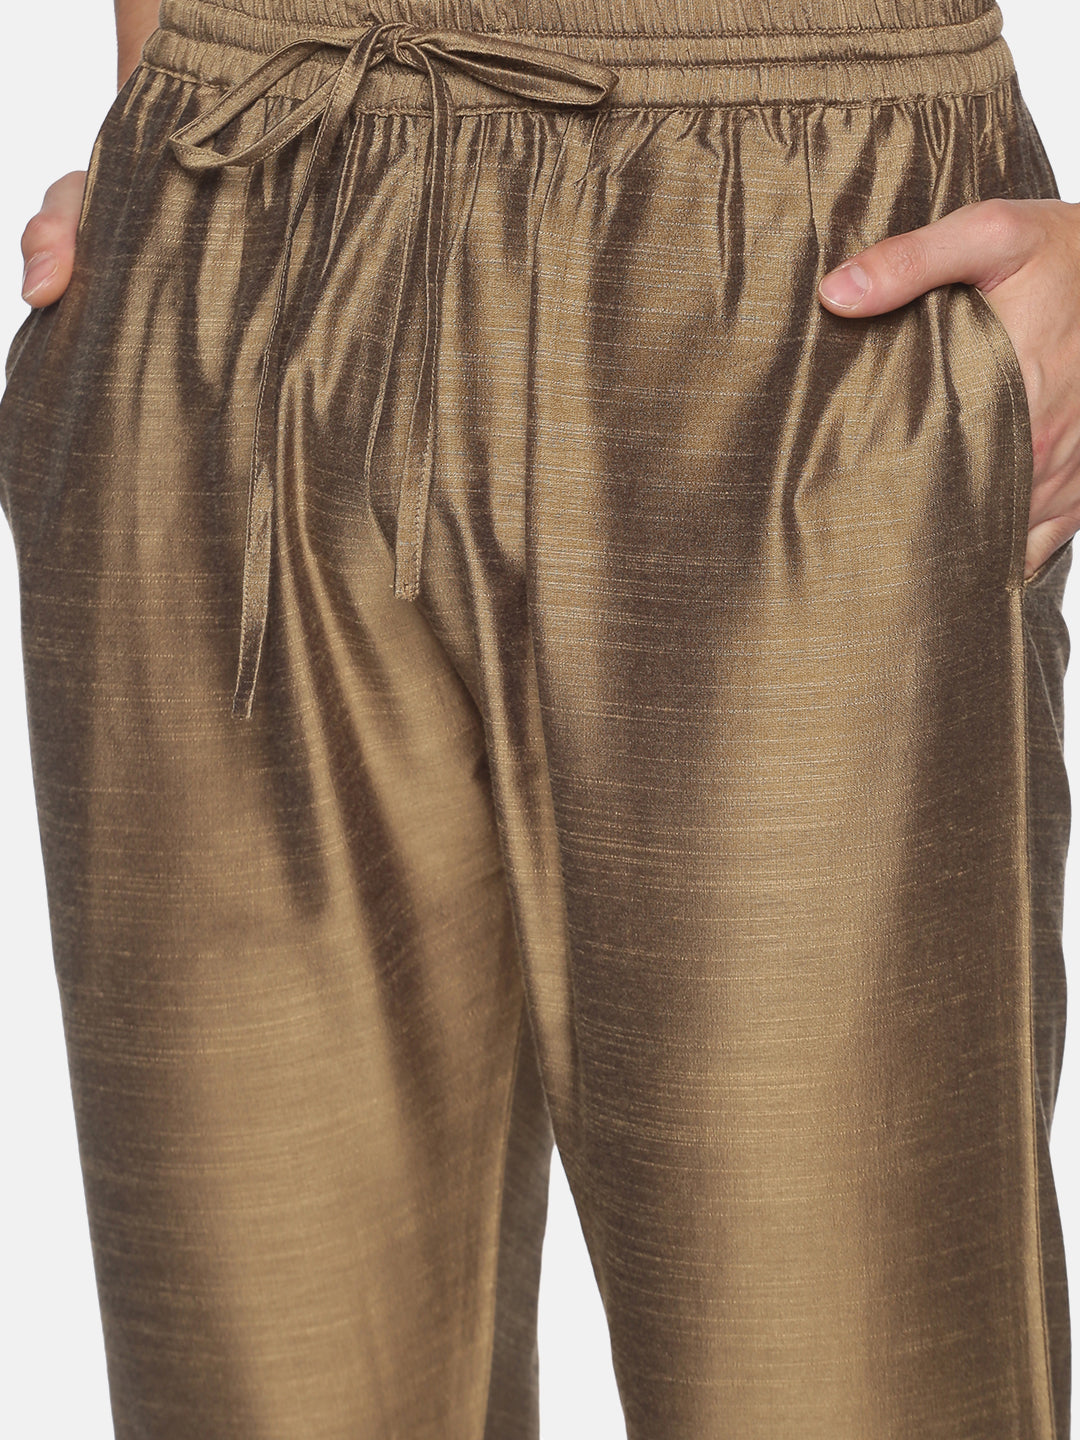 Mannat Fashion Party wear Fancy Latest Design Golden Cotton Silk Pant with  Cotton Lining Trousers  Pants